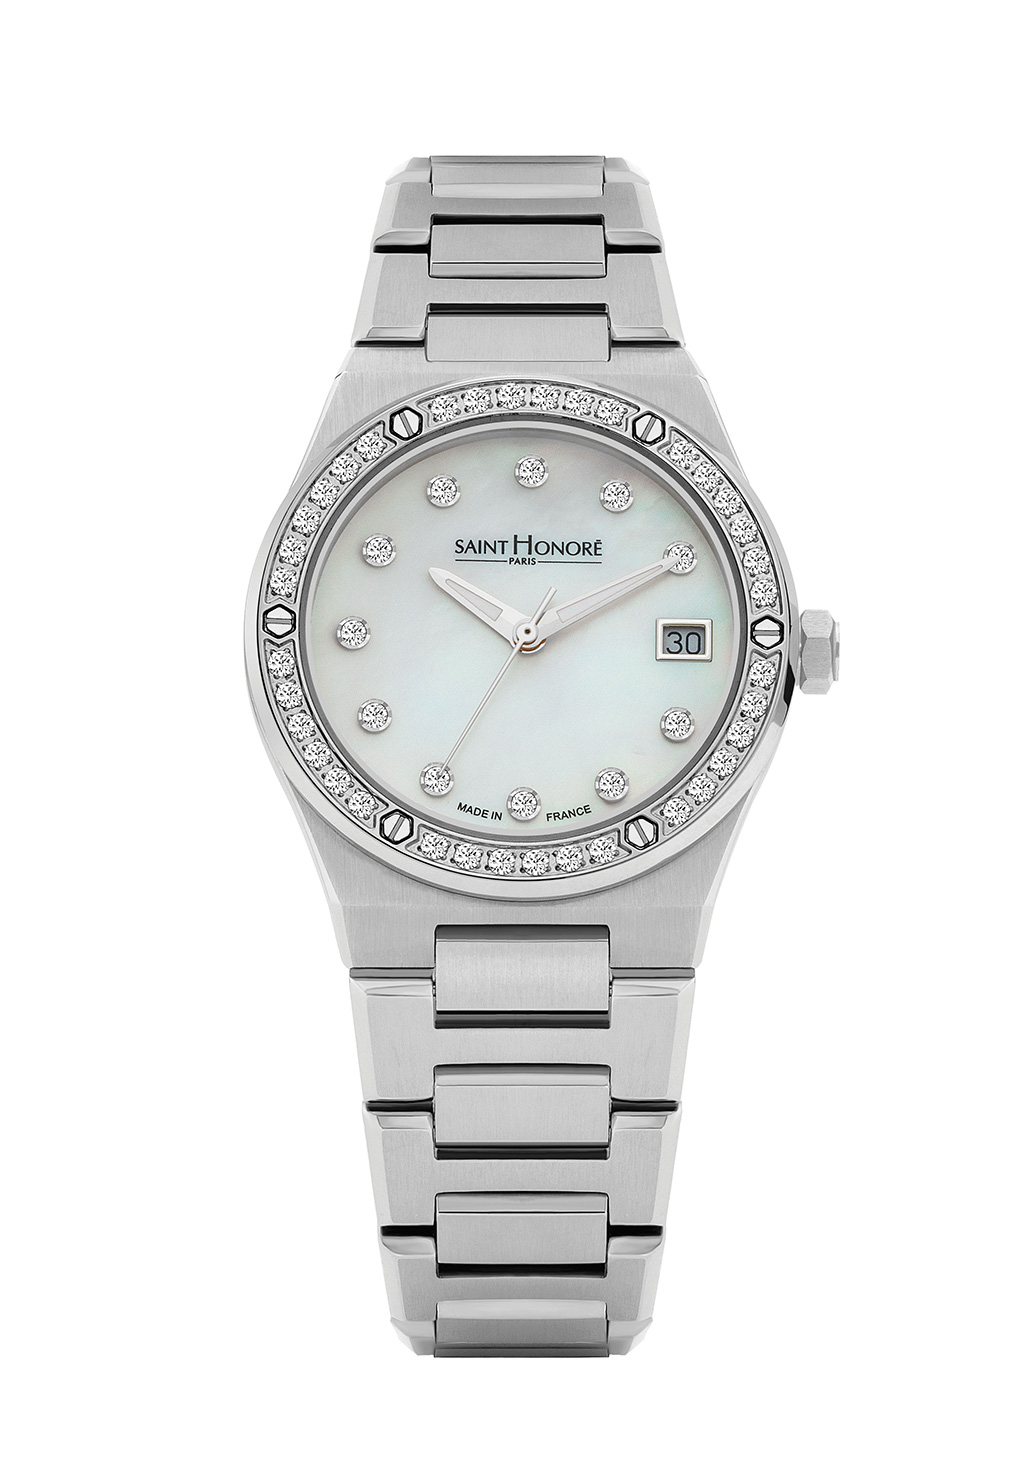 HAUSSMAN II Women's watch - stainless steel, white & diamond effect dial, stainless steel strap